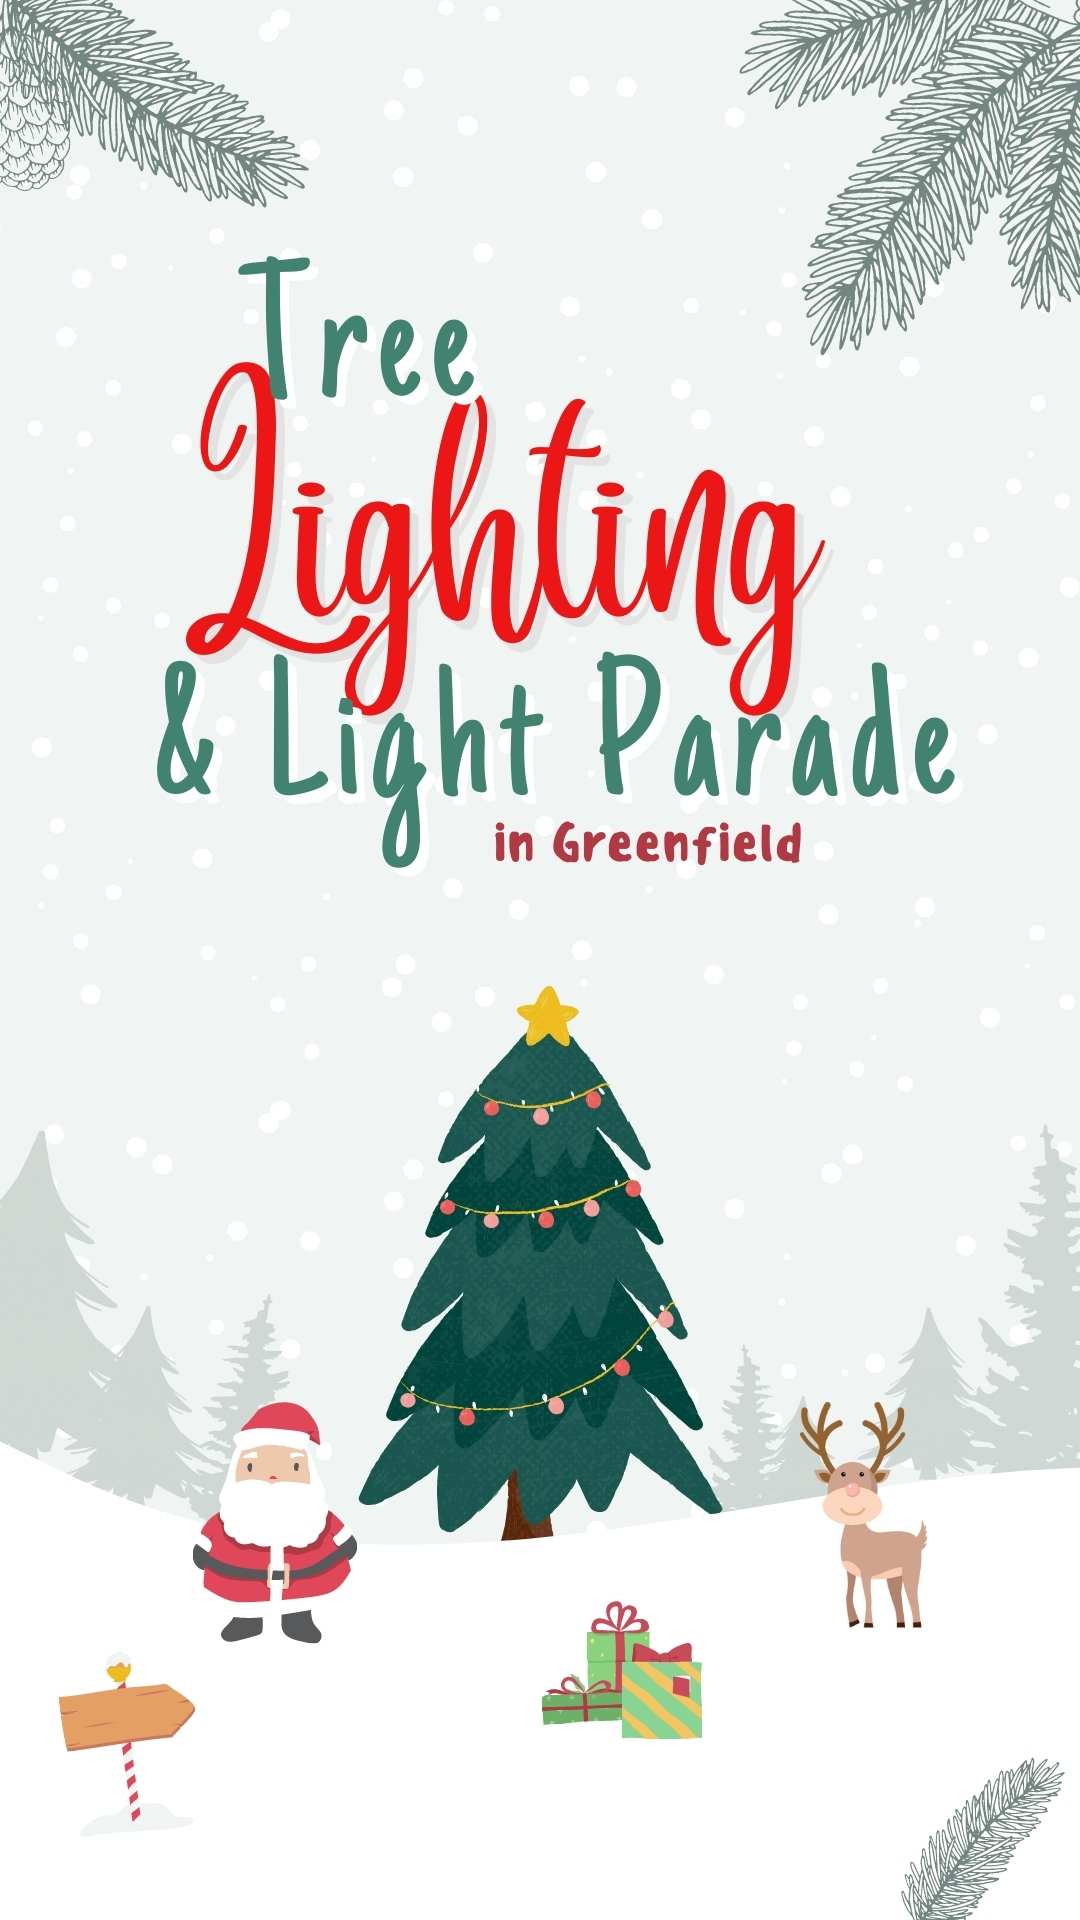 Greenfield Christmas Parade & Tree Lighting